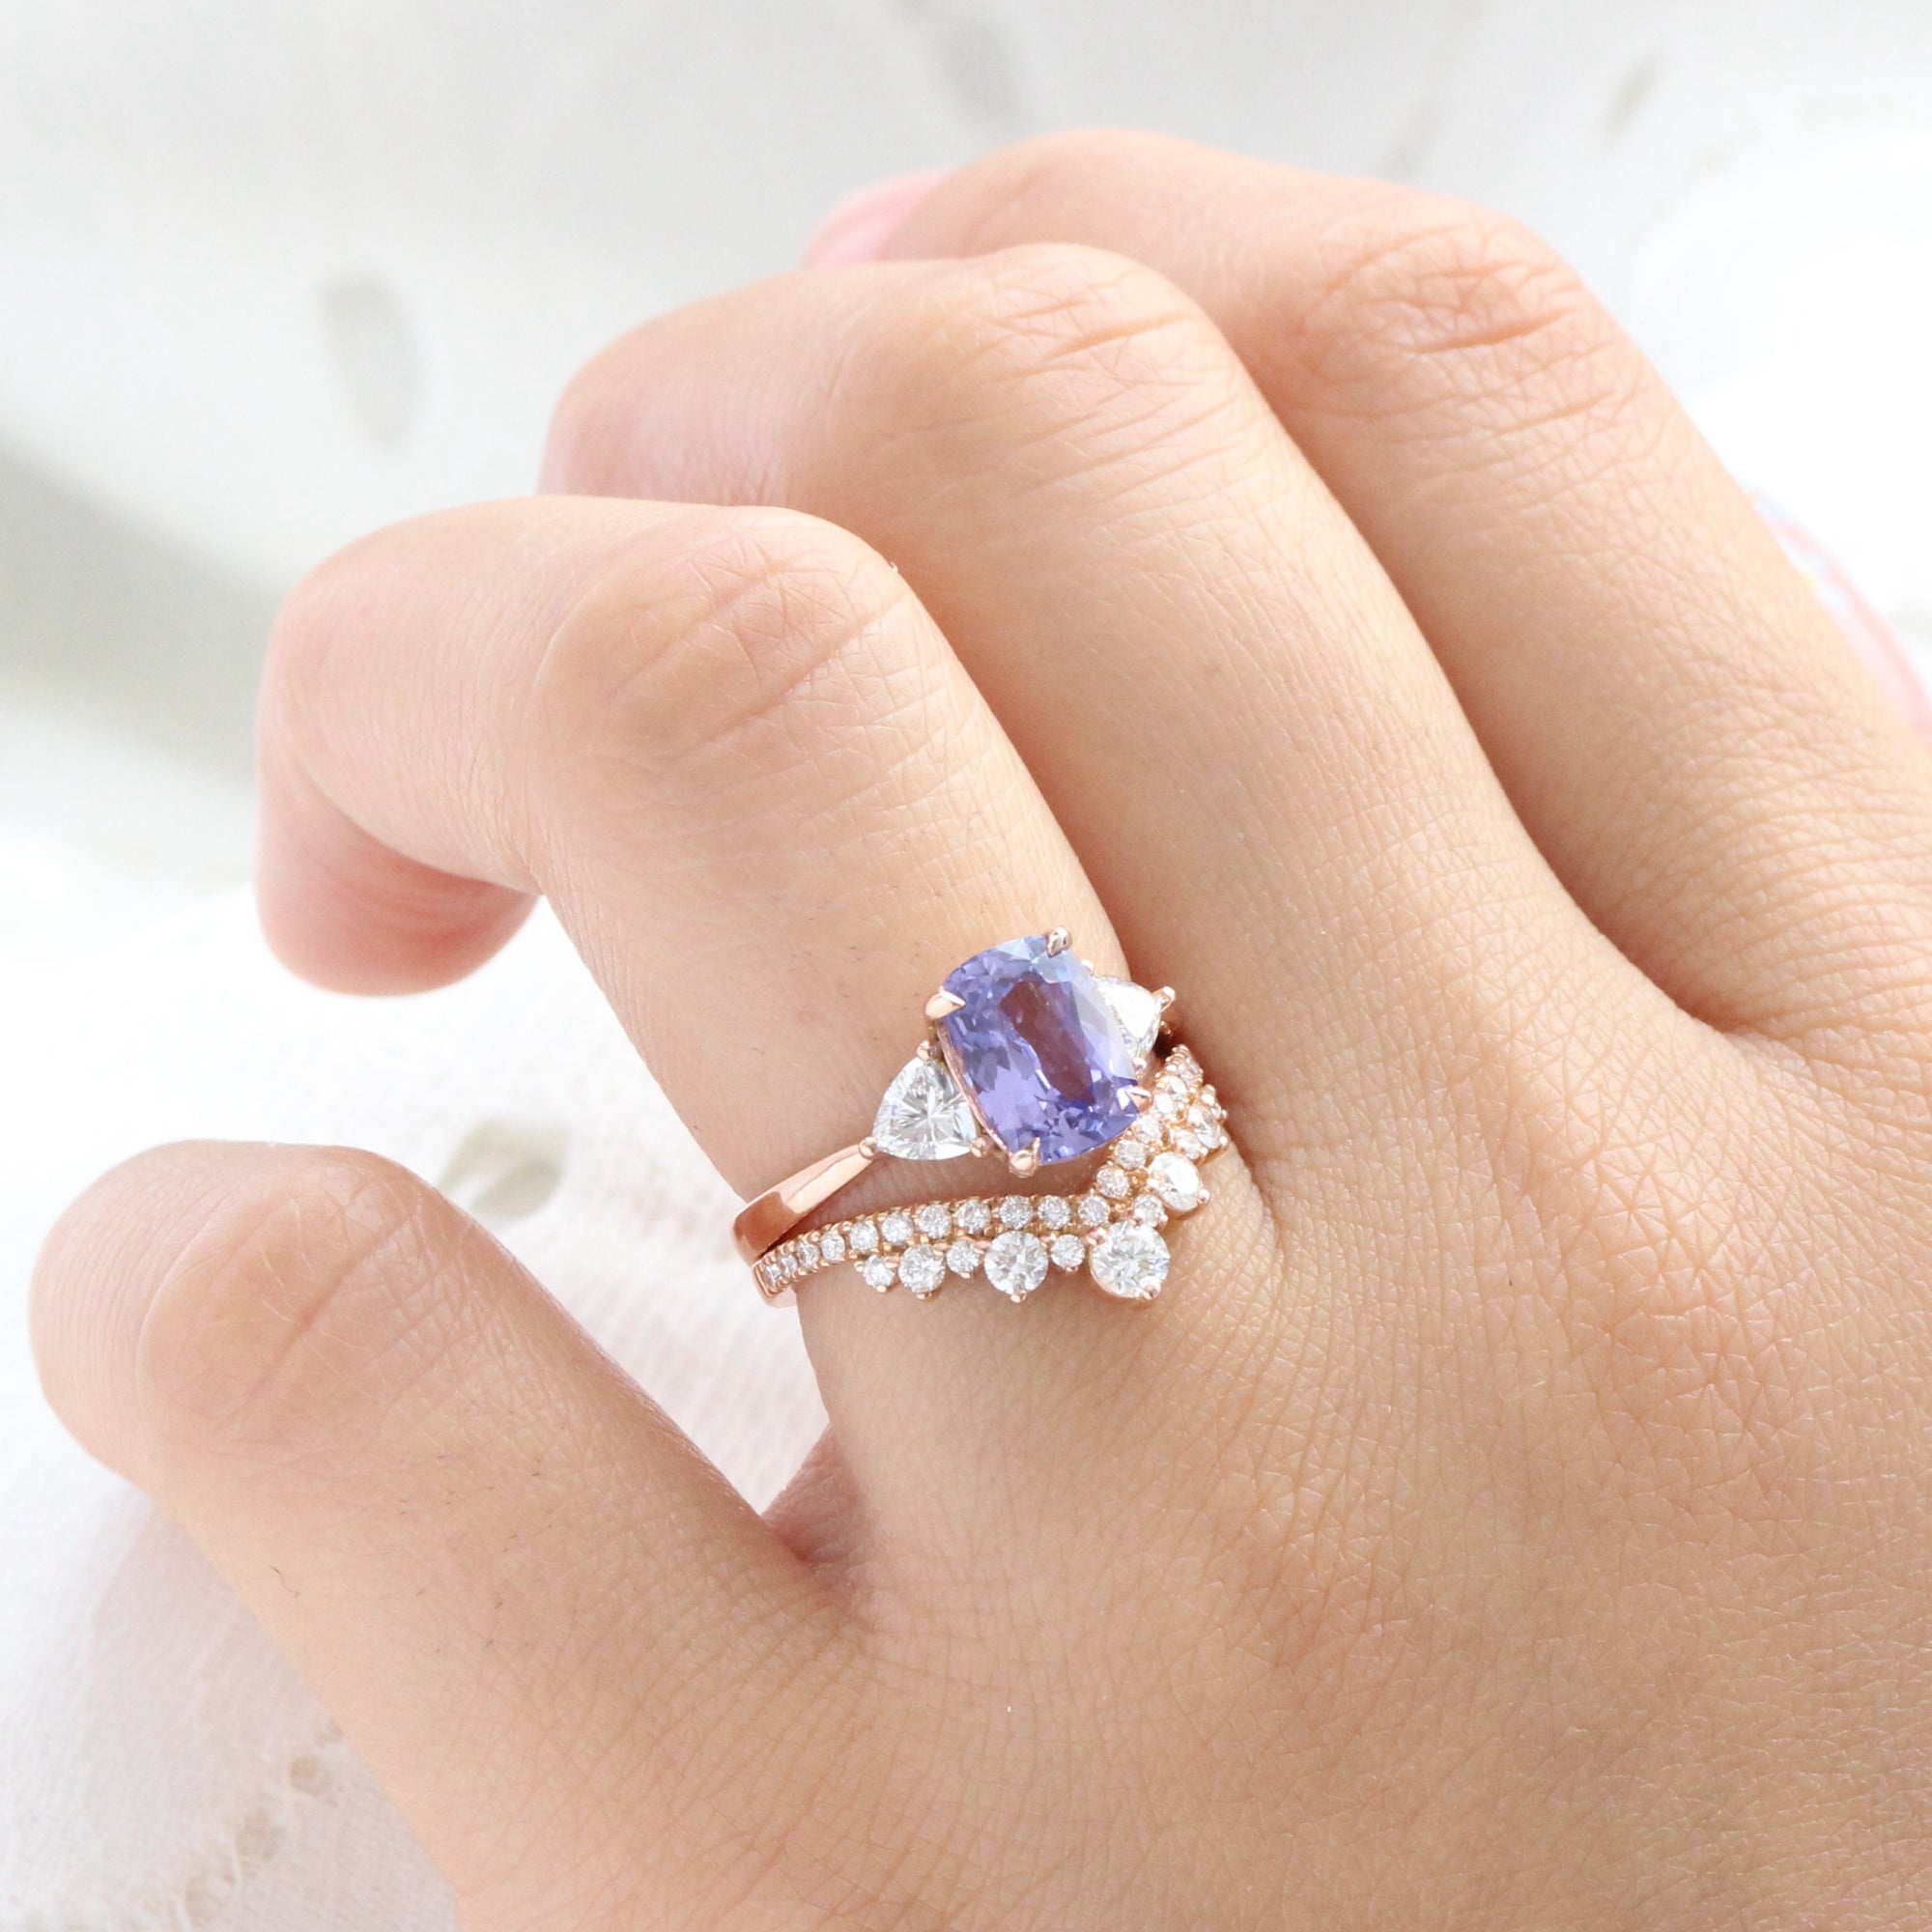 Cushion lavender purple sapphire ring rose gold 3 stone diamond ring la more design jewelry